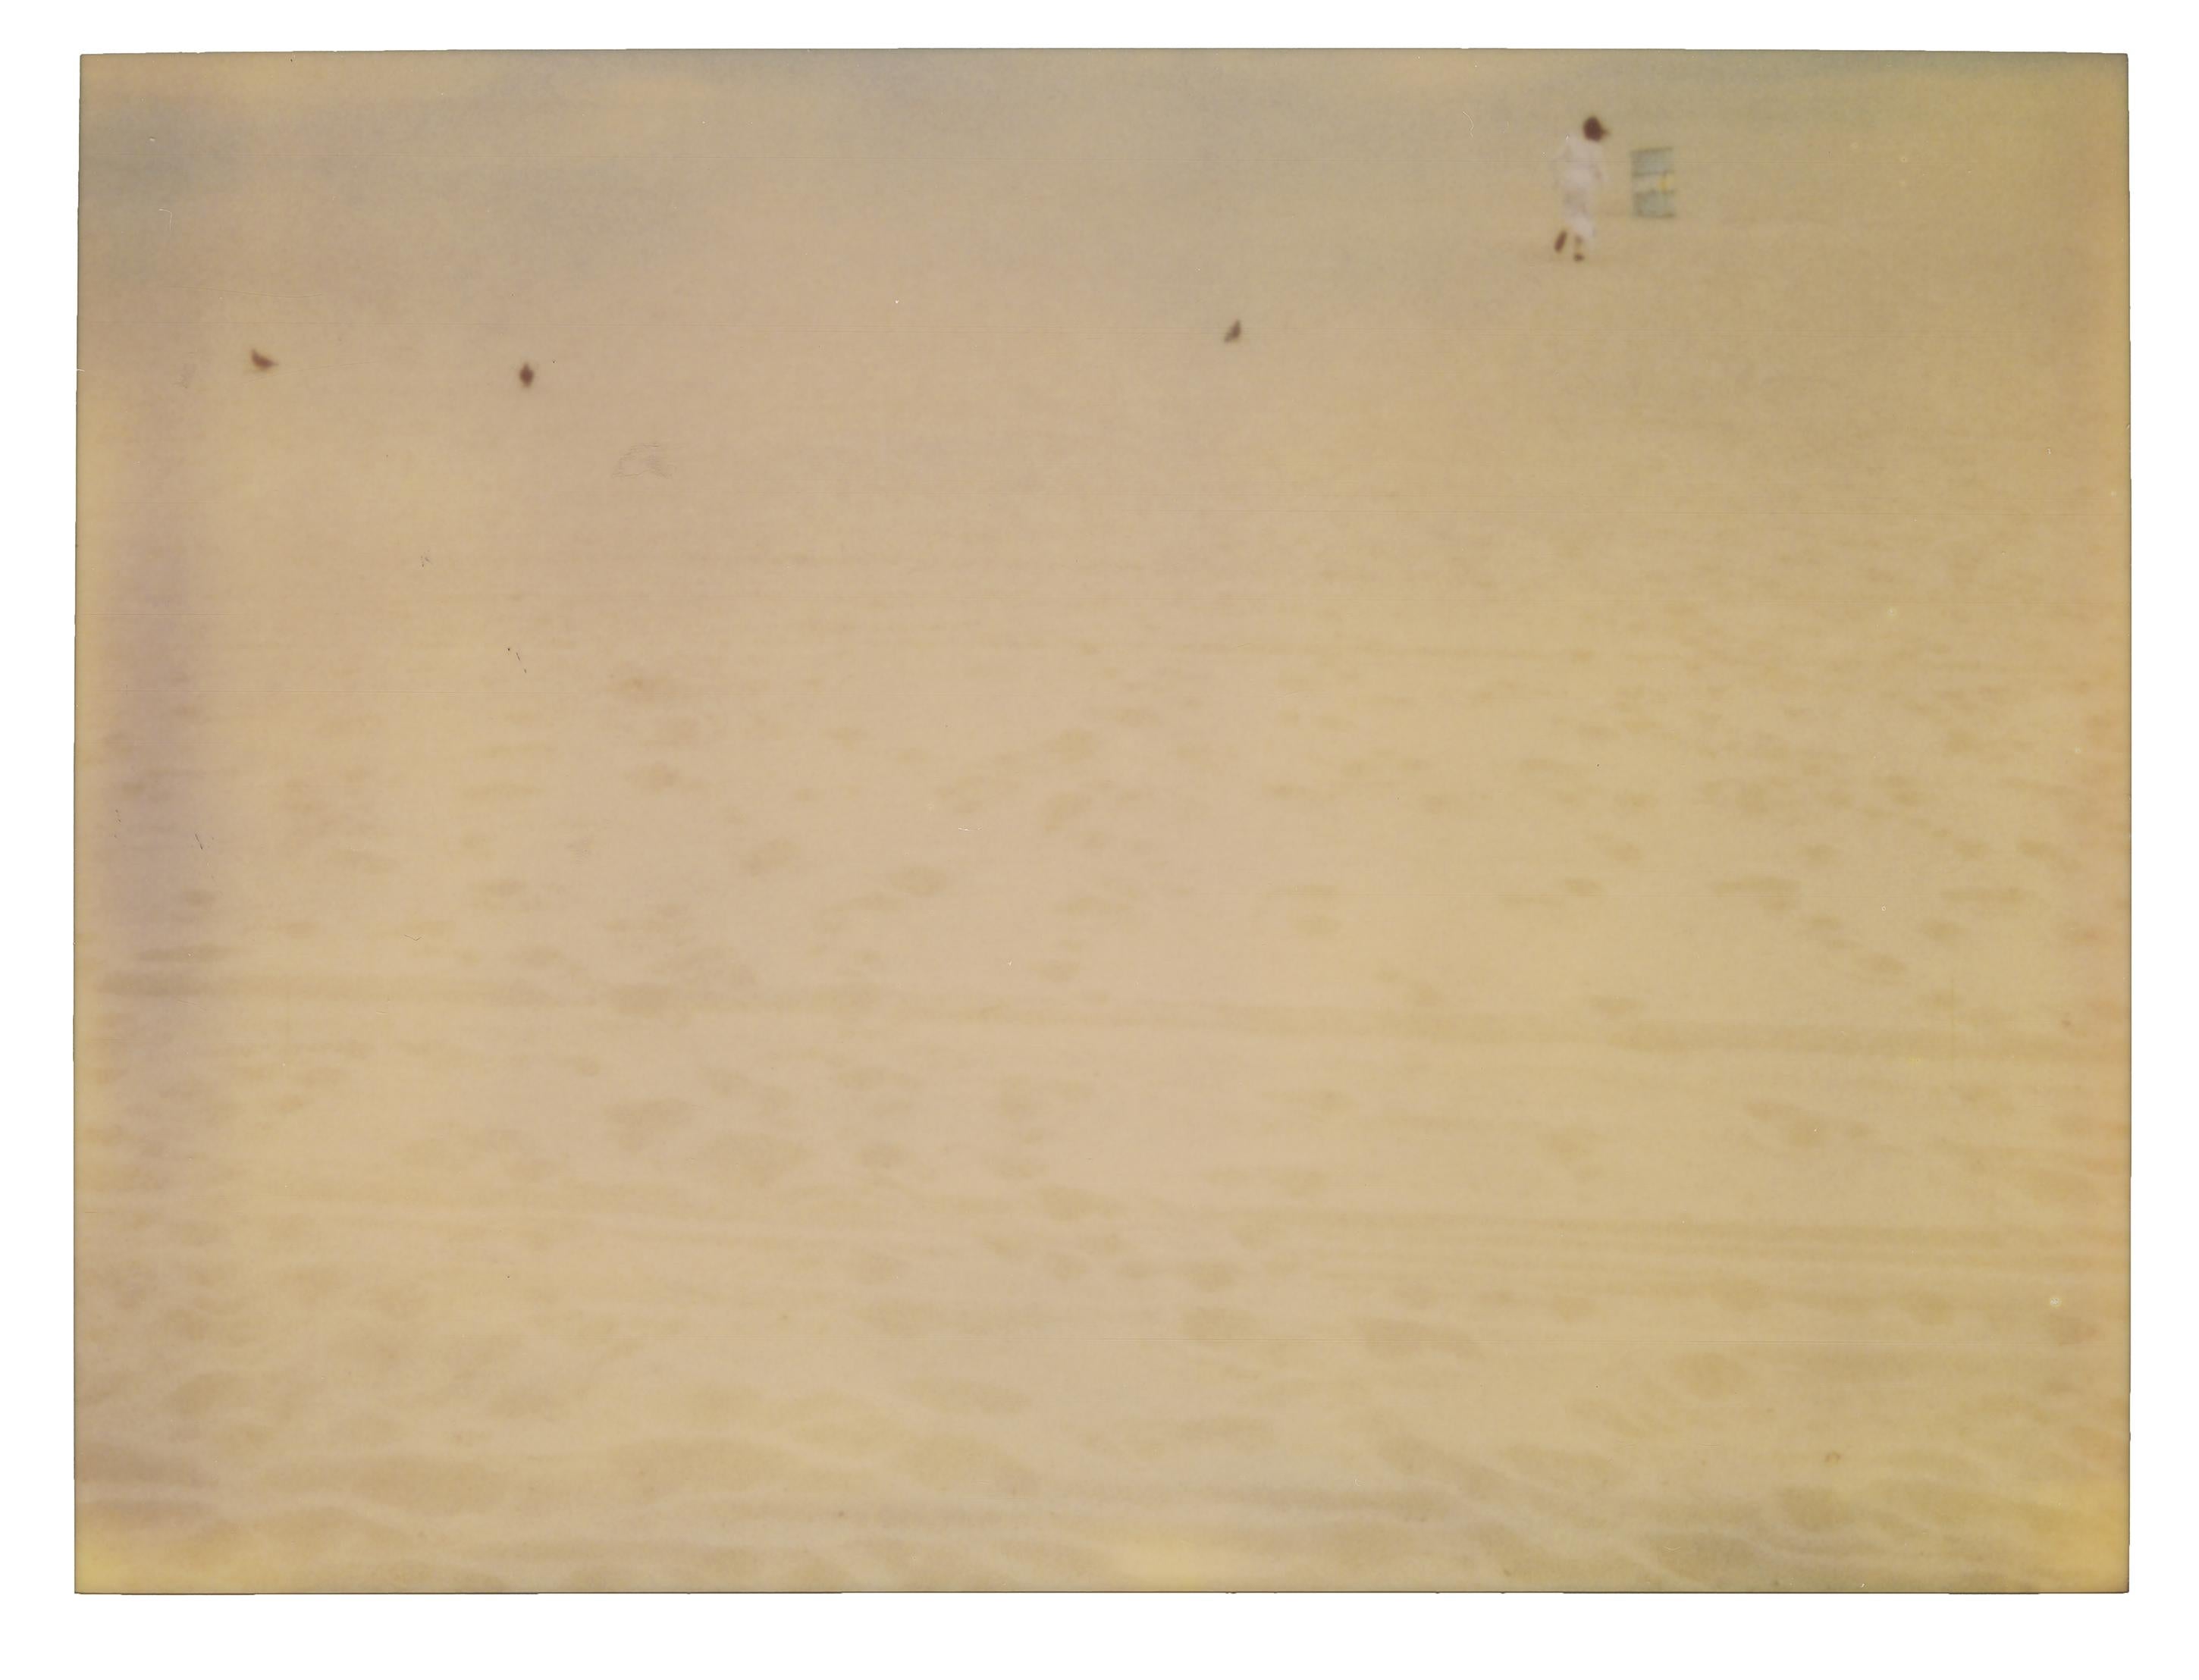 Stefanie Schneider Landscape Photograph - Untitled - Venice Beach, Contemporary, Landscape, expired, Polaroid, analog